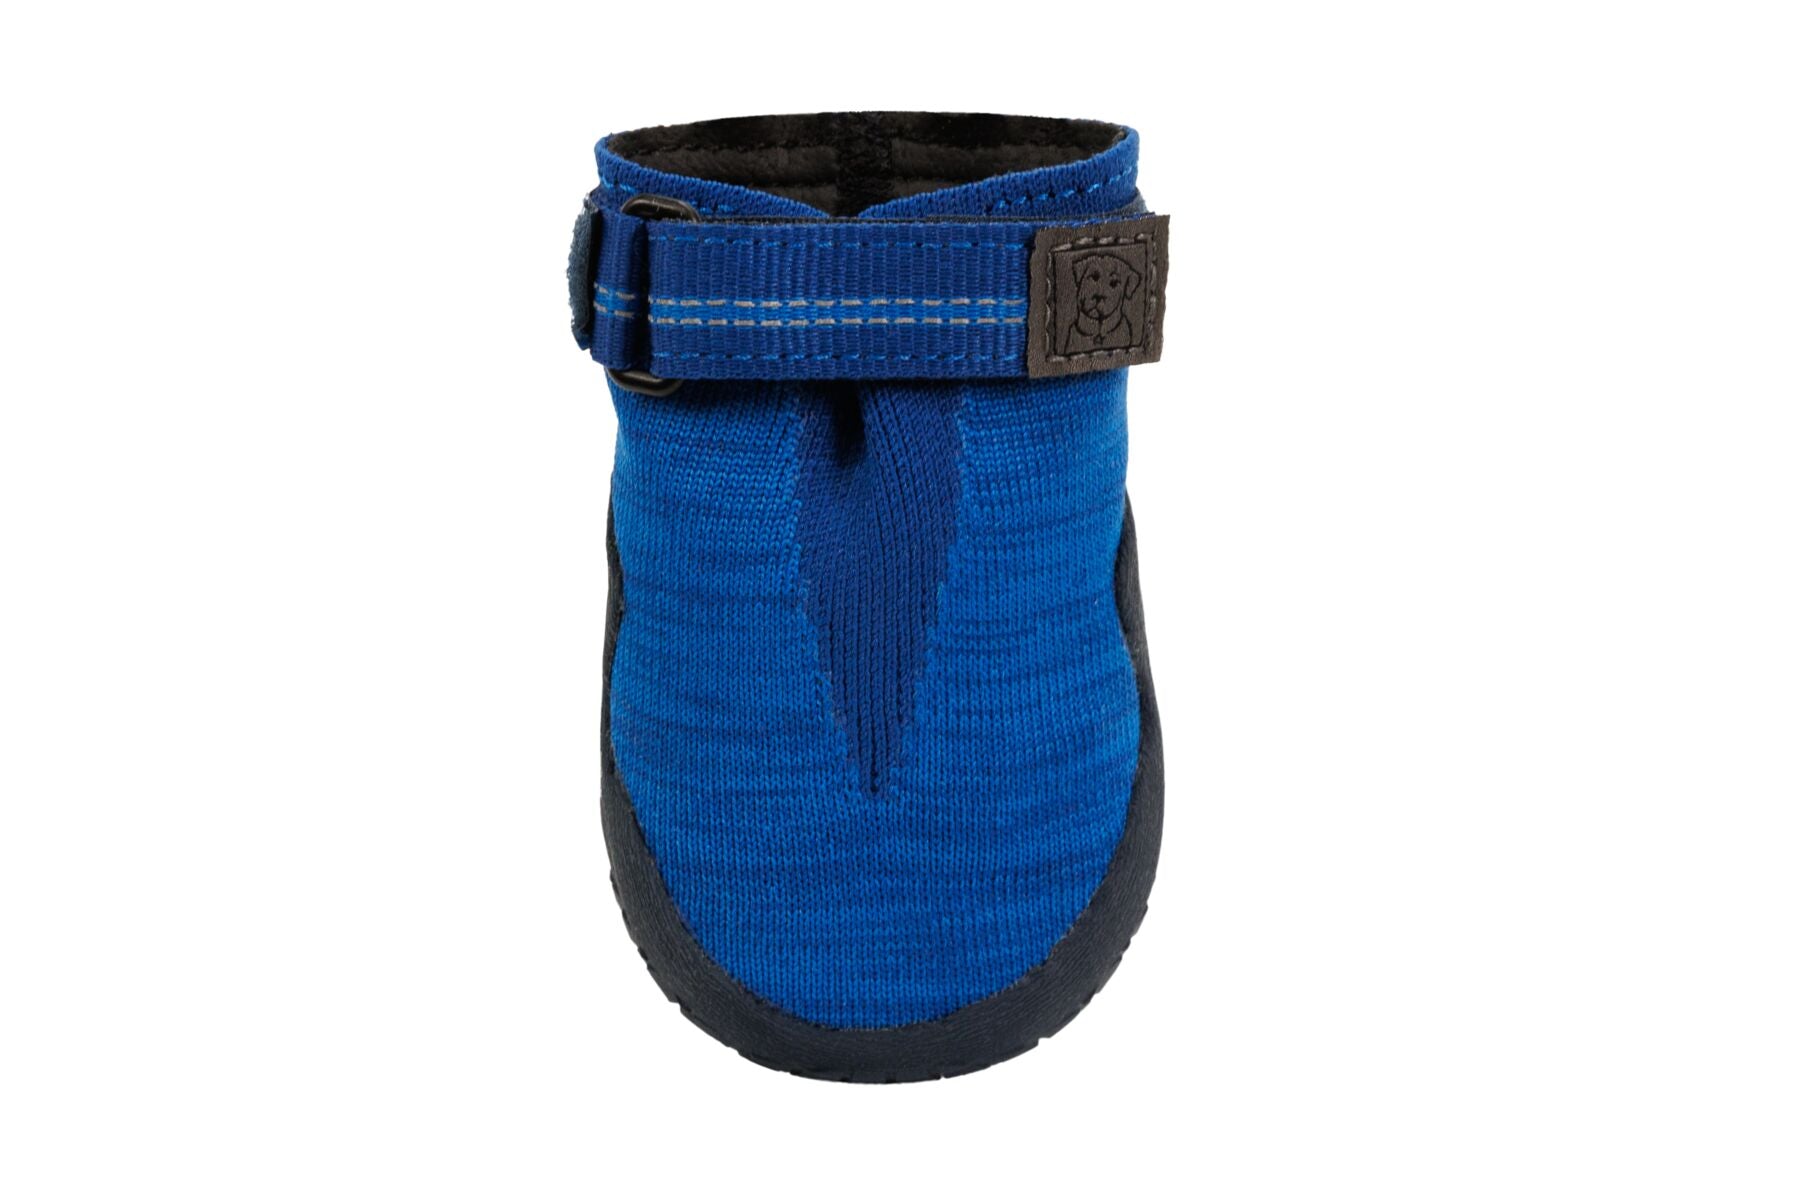 Botas para Perros Hi & Light™ de Ruffwear en Azul (Blue Pool)(PAR DE BOTAS / 2 BOTAS)